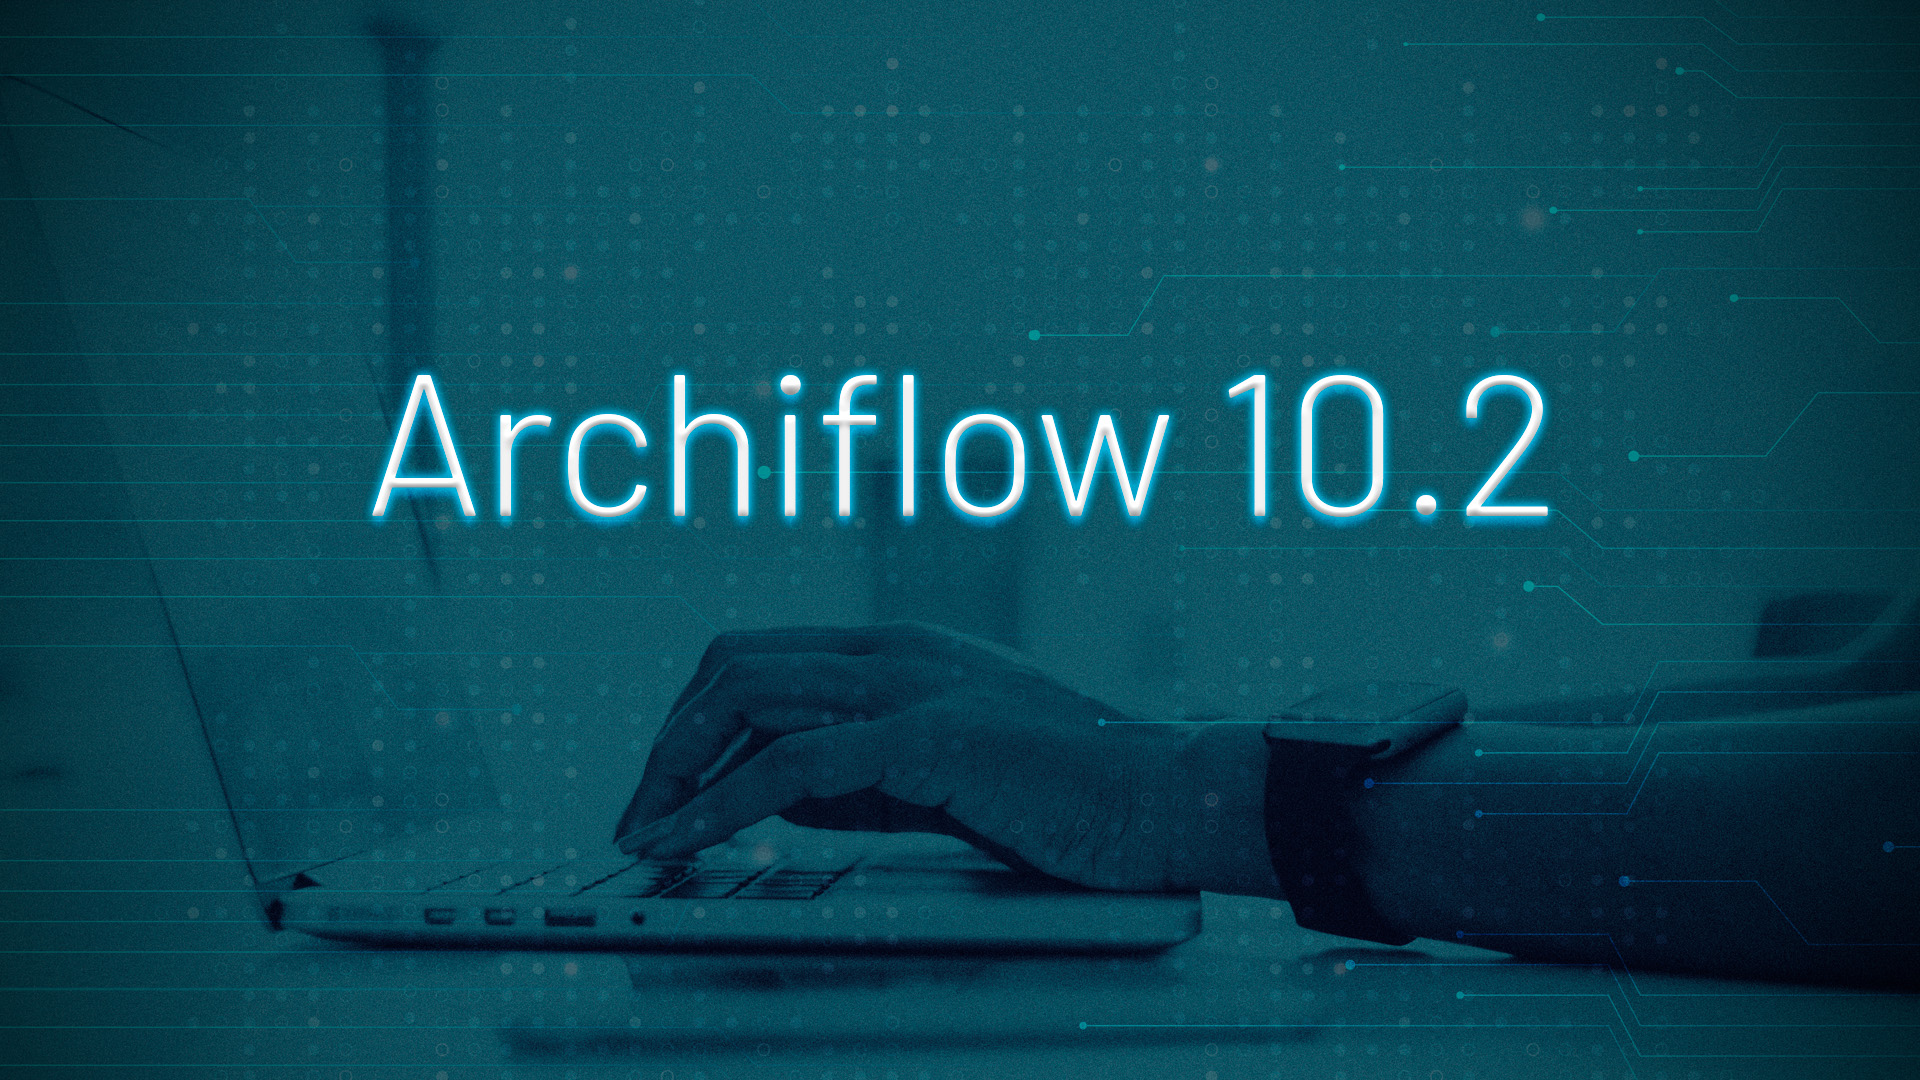 archiflow 10.2